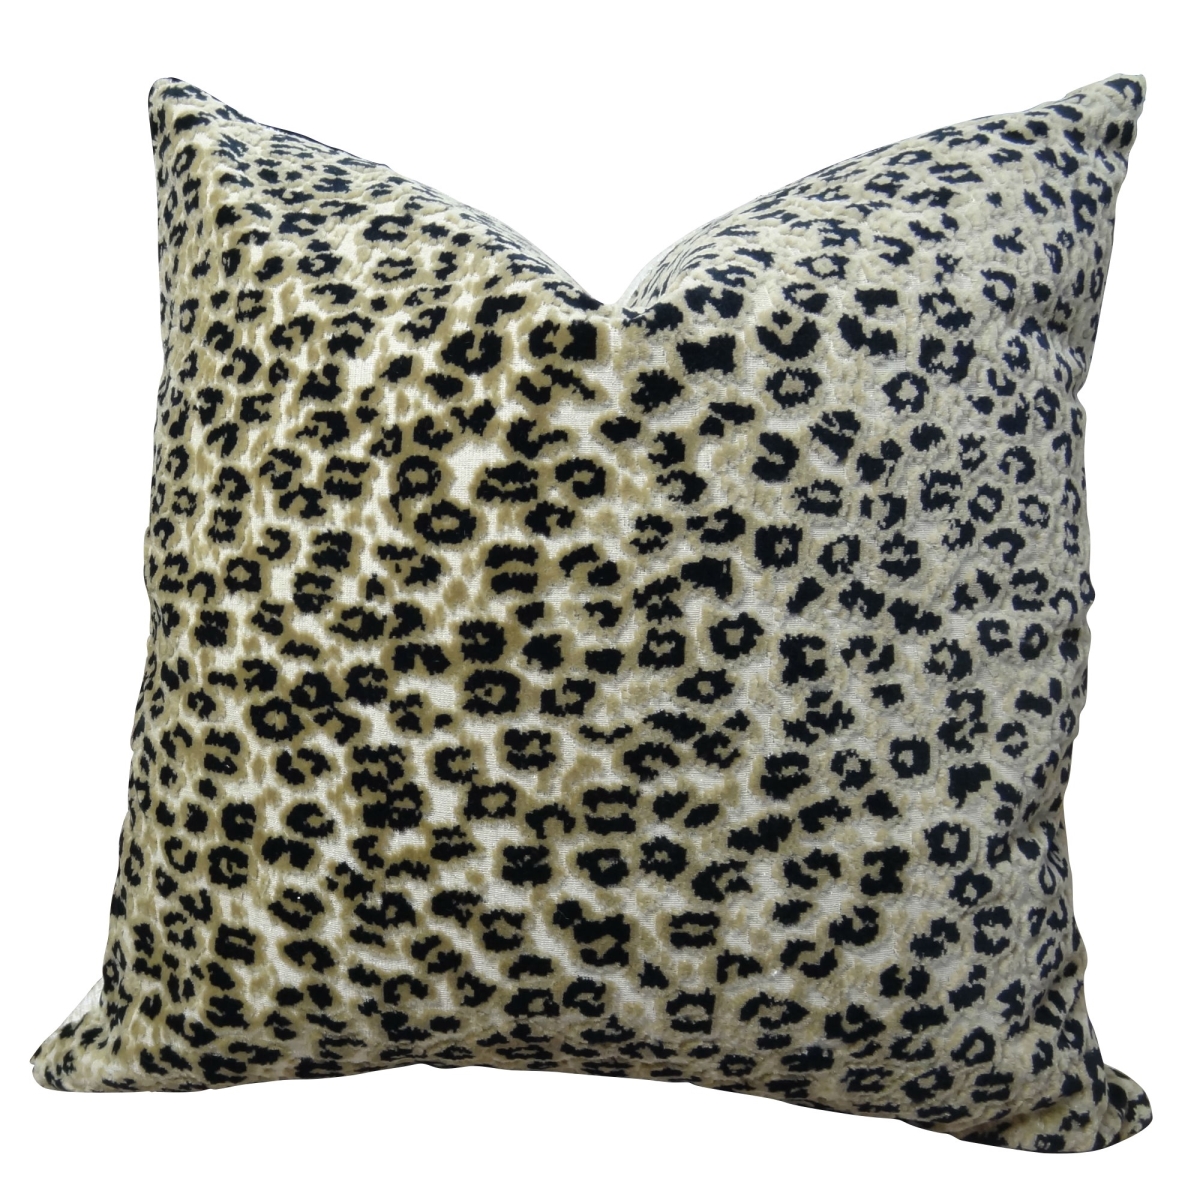 Plutus PB11020-2626-SP Cheetah Handmade Throw Pillow, Taupe & Black - 26 x 26 in.